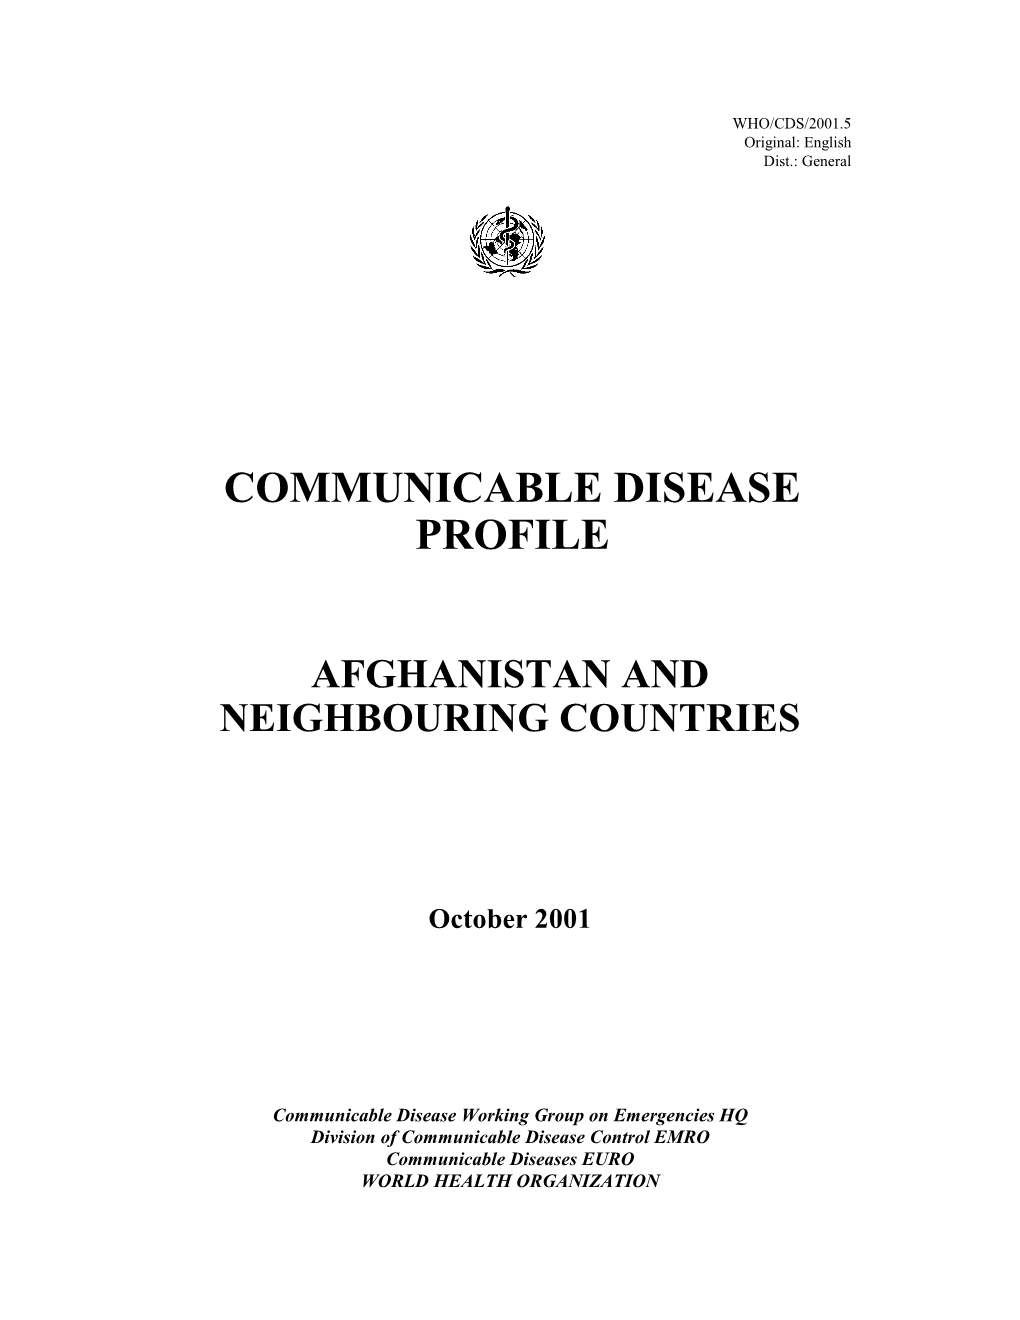 Communicable Disease Profile